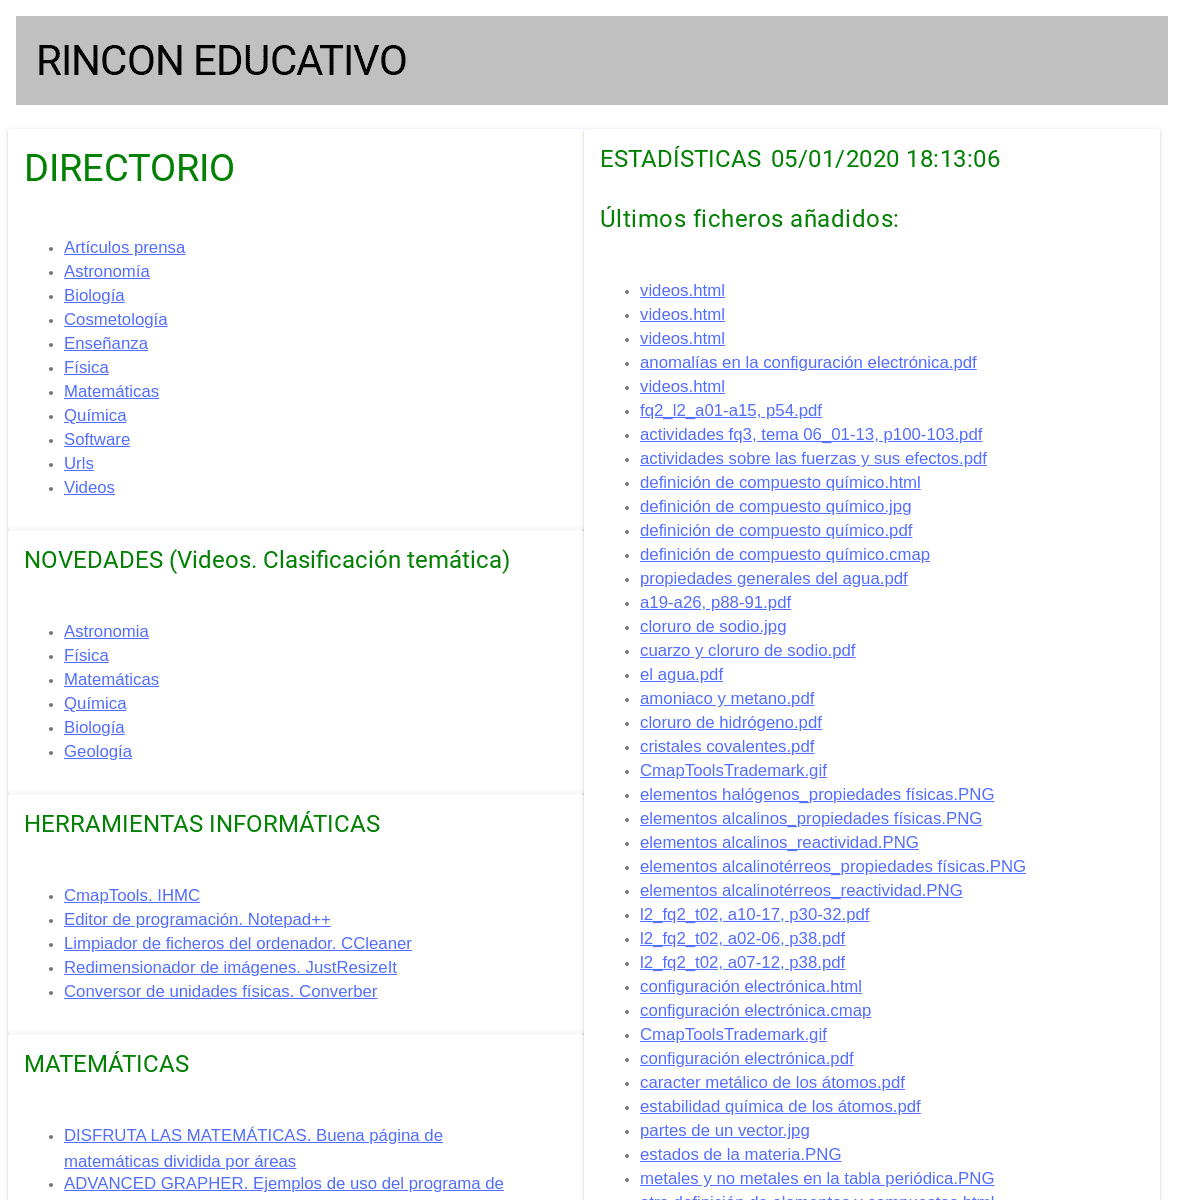 A complete backup of rinconeducativo.com